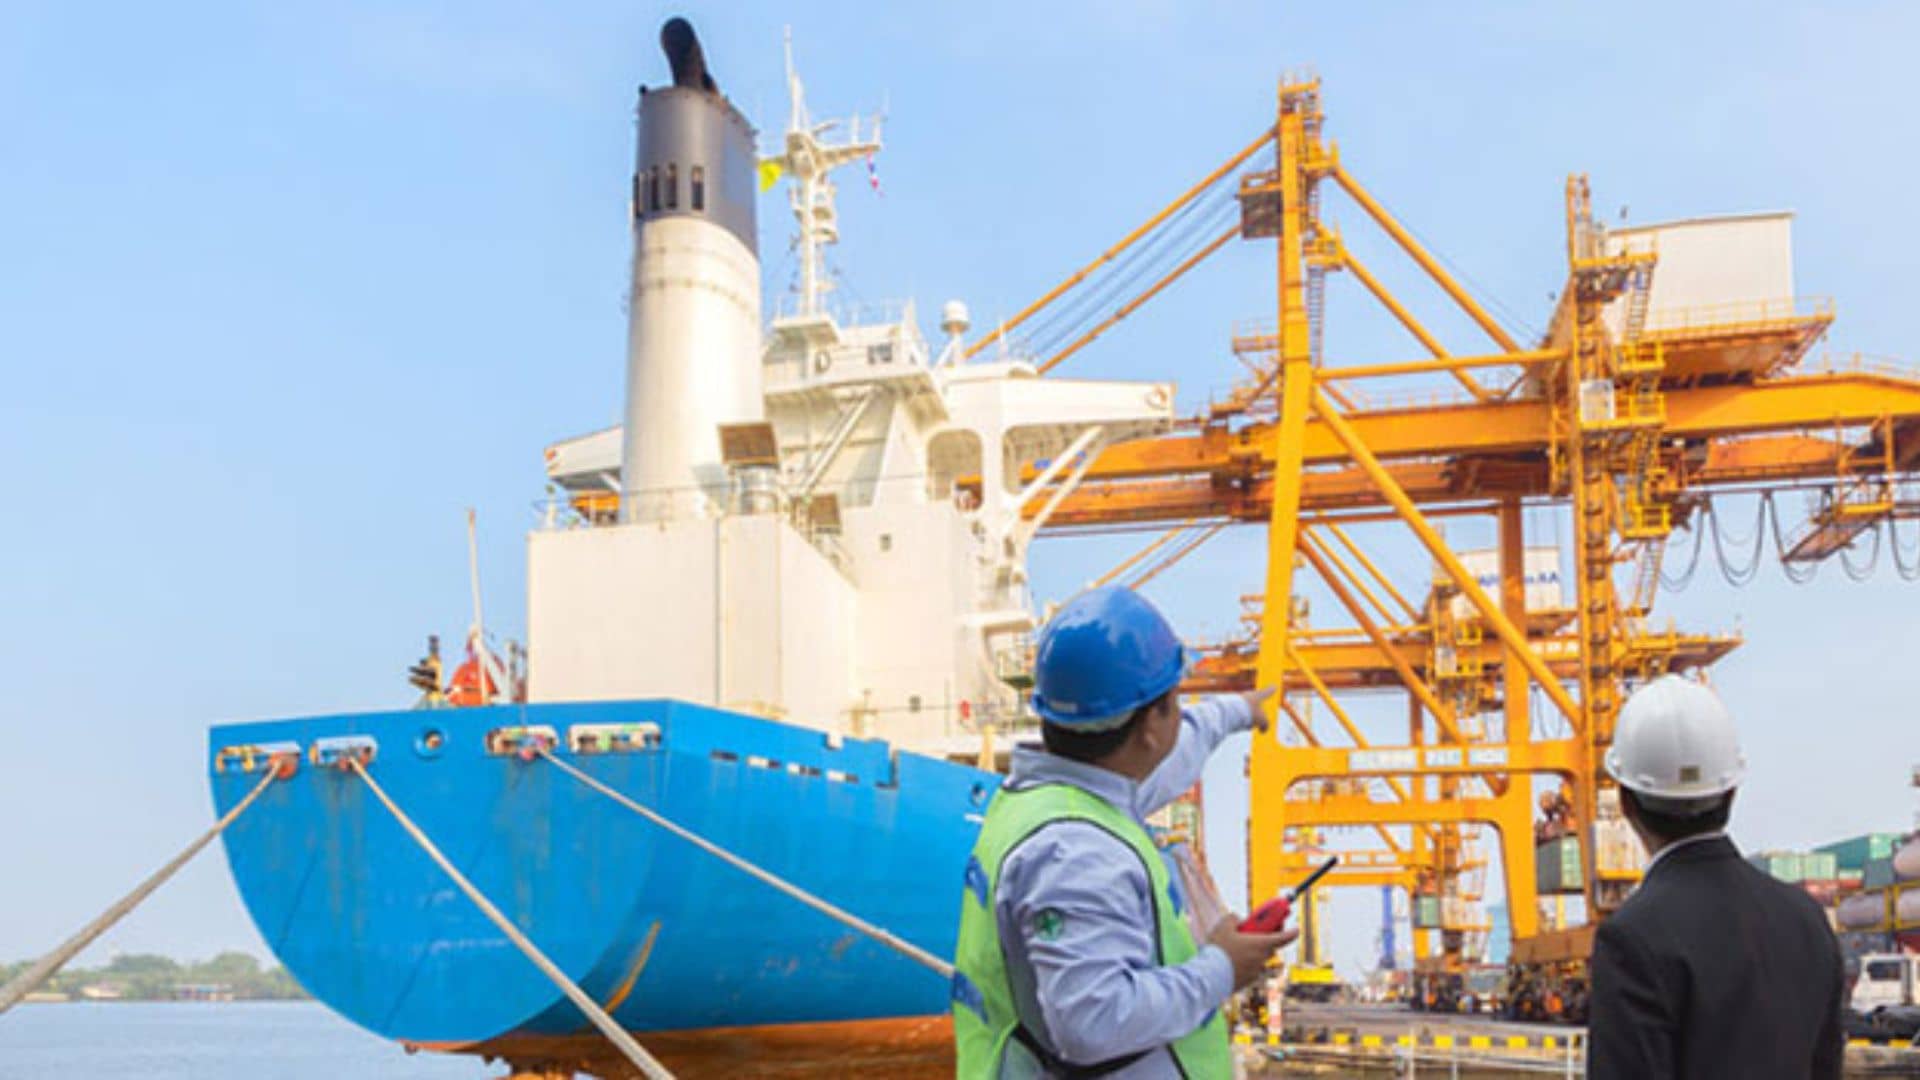 What Marine Management Shipping Strategies Work